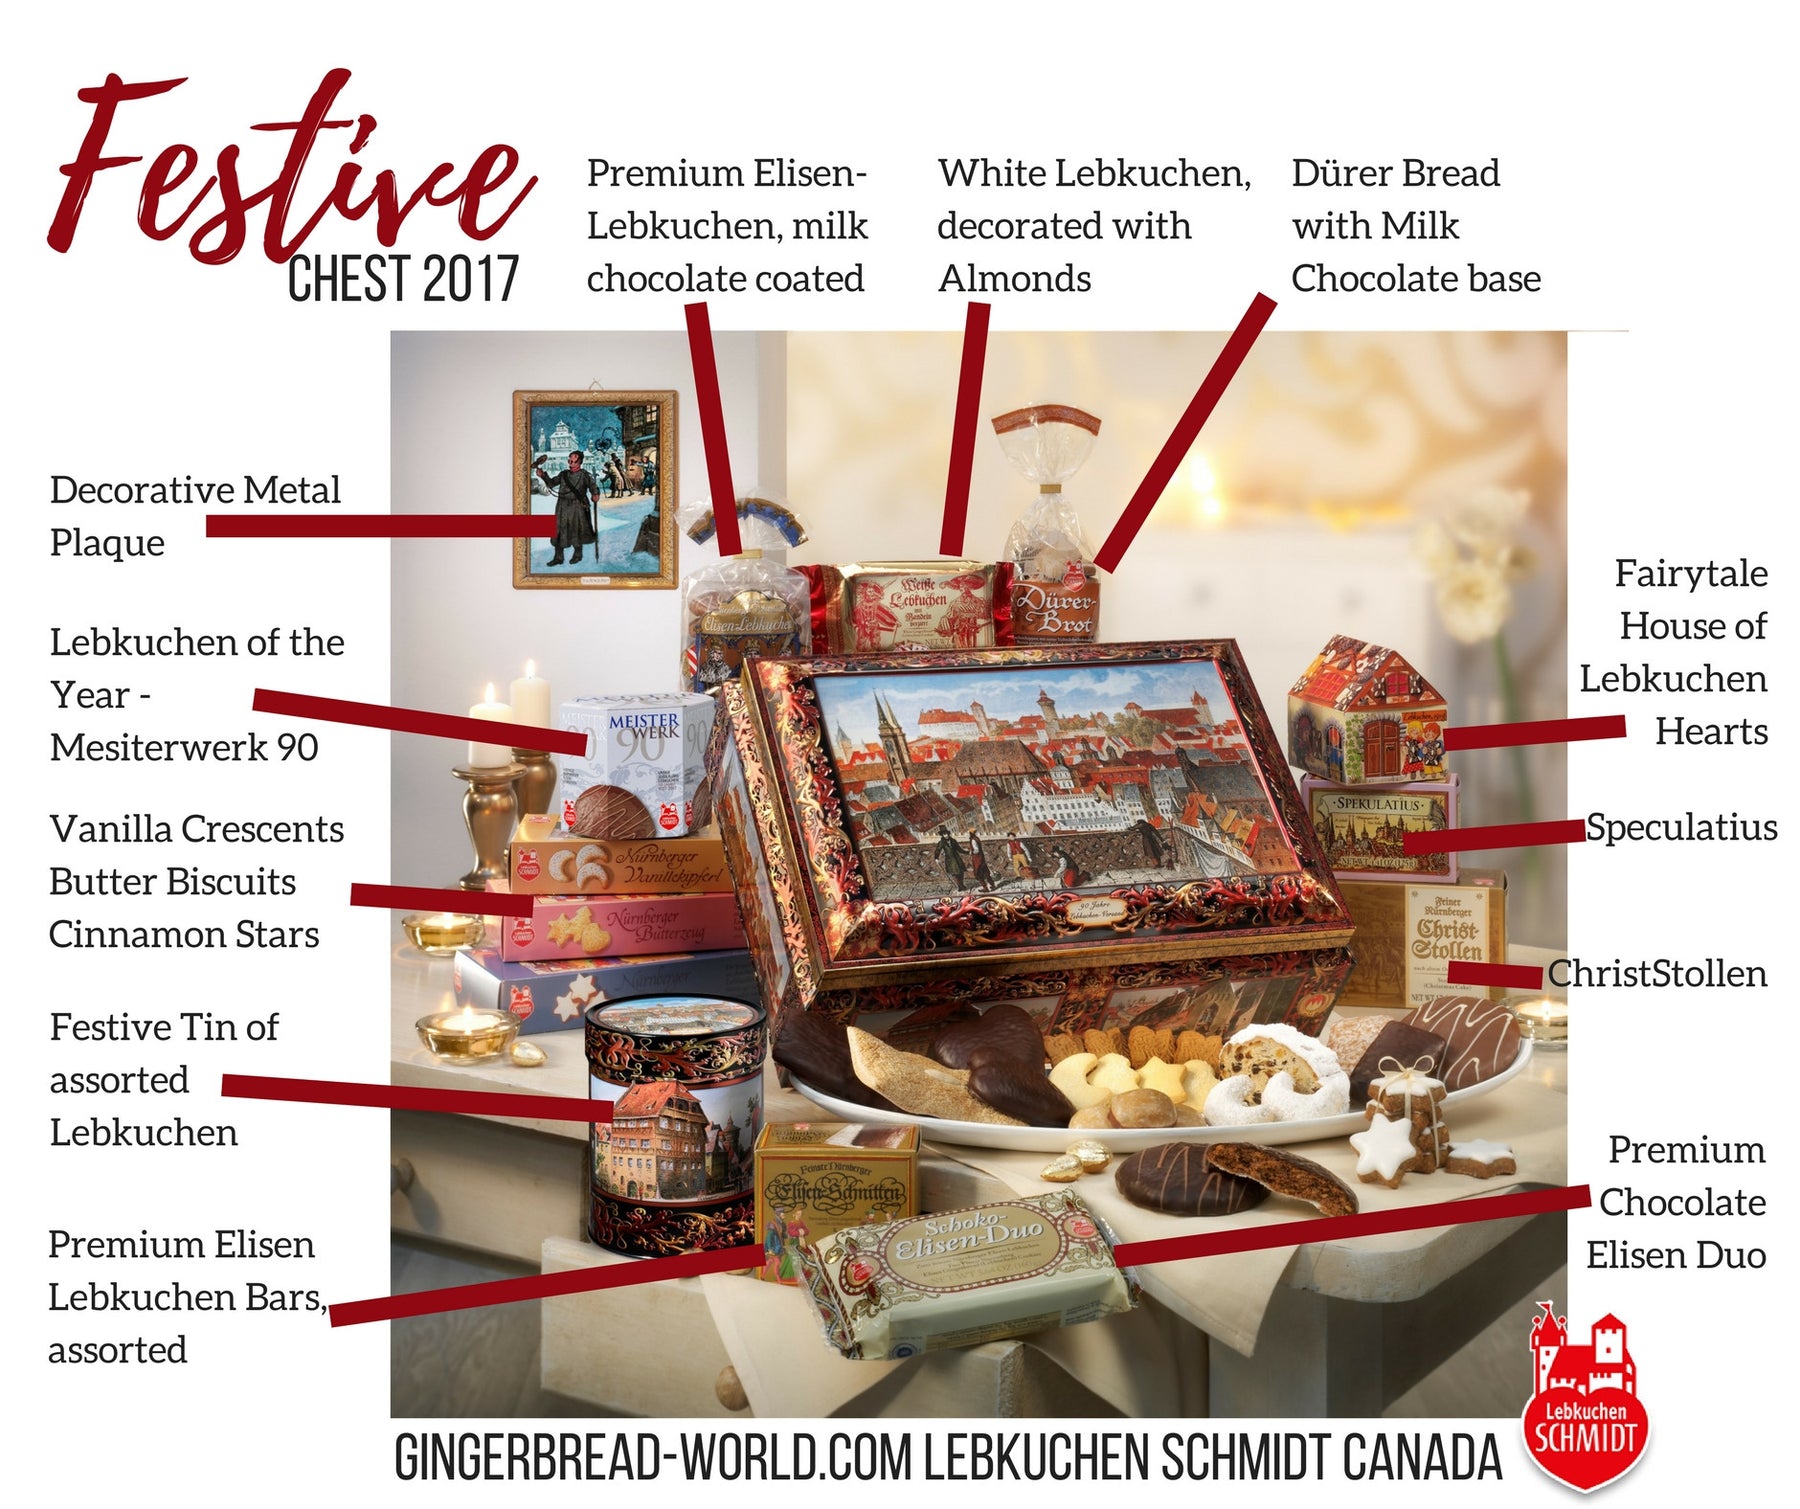 The Christmas Lebkuchen Treasures Inside the Festive Chest 2017